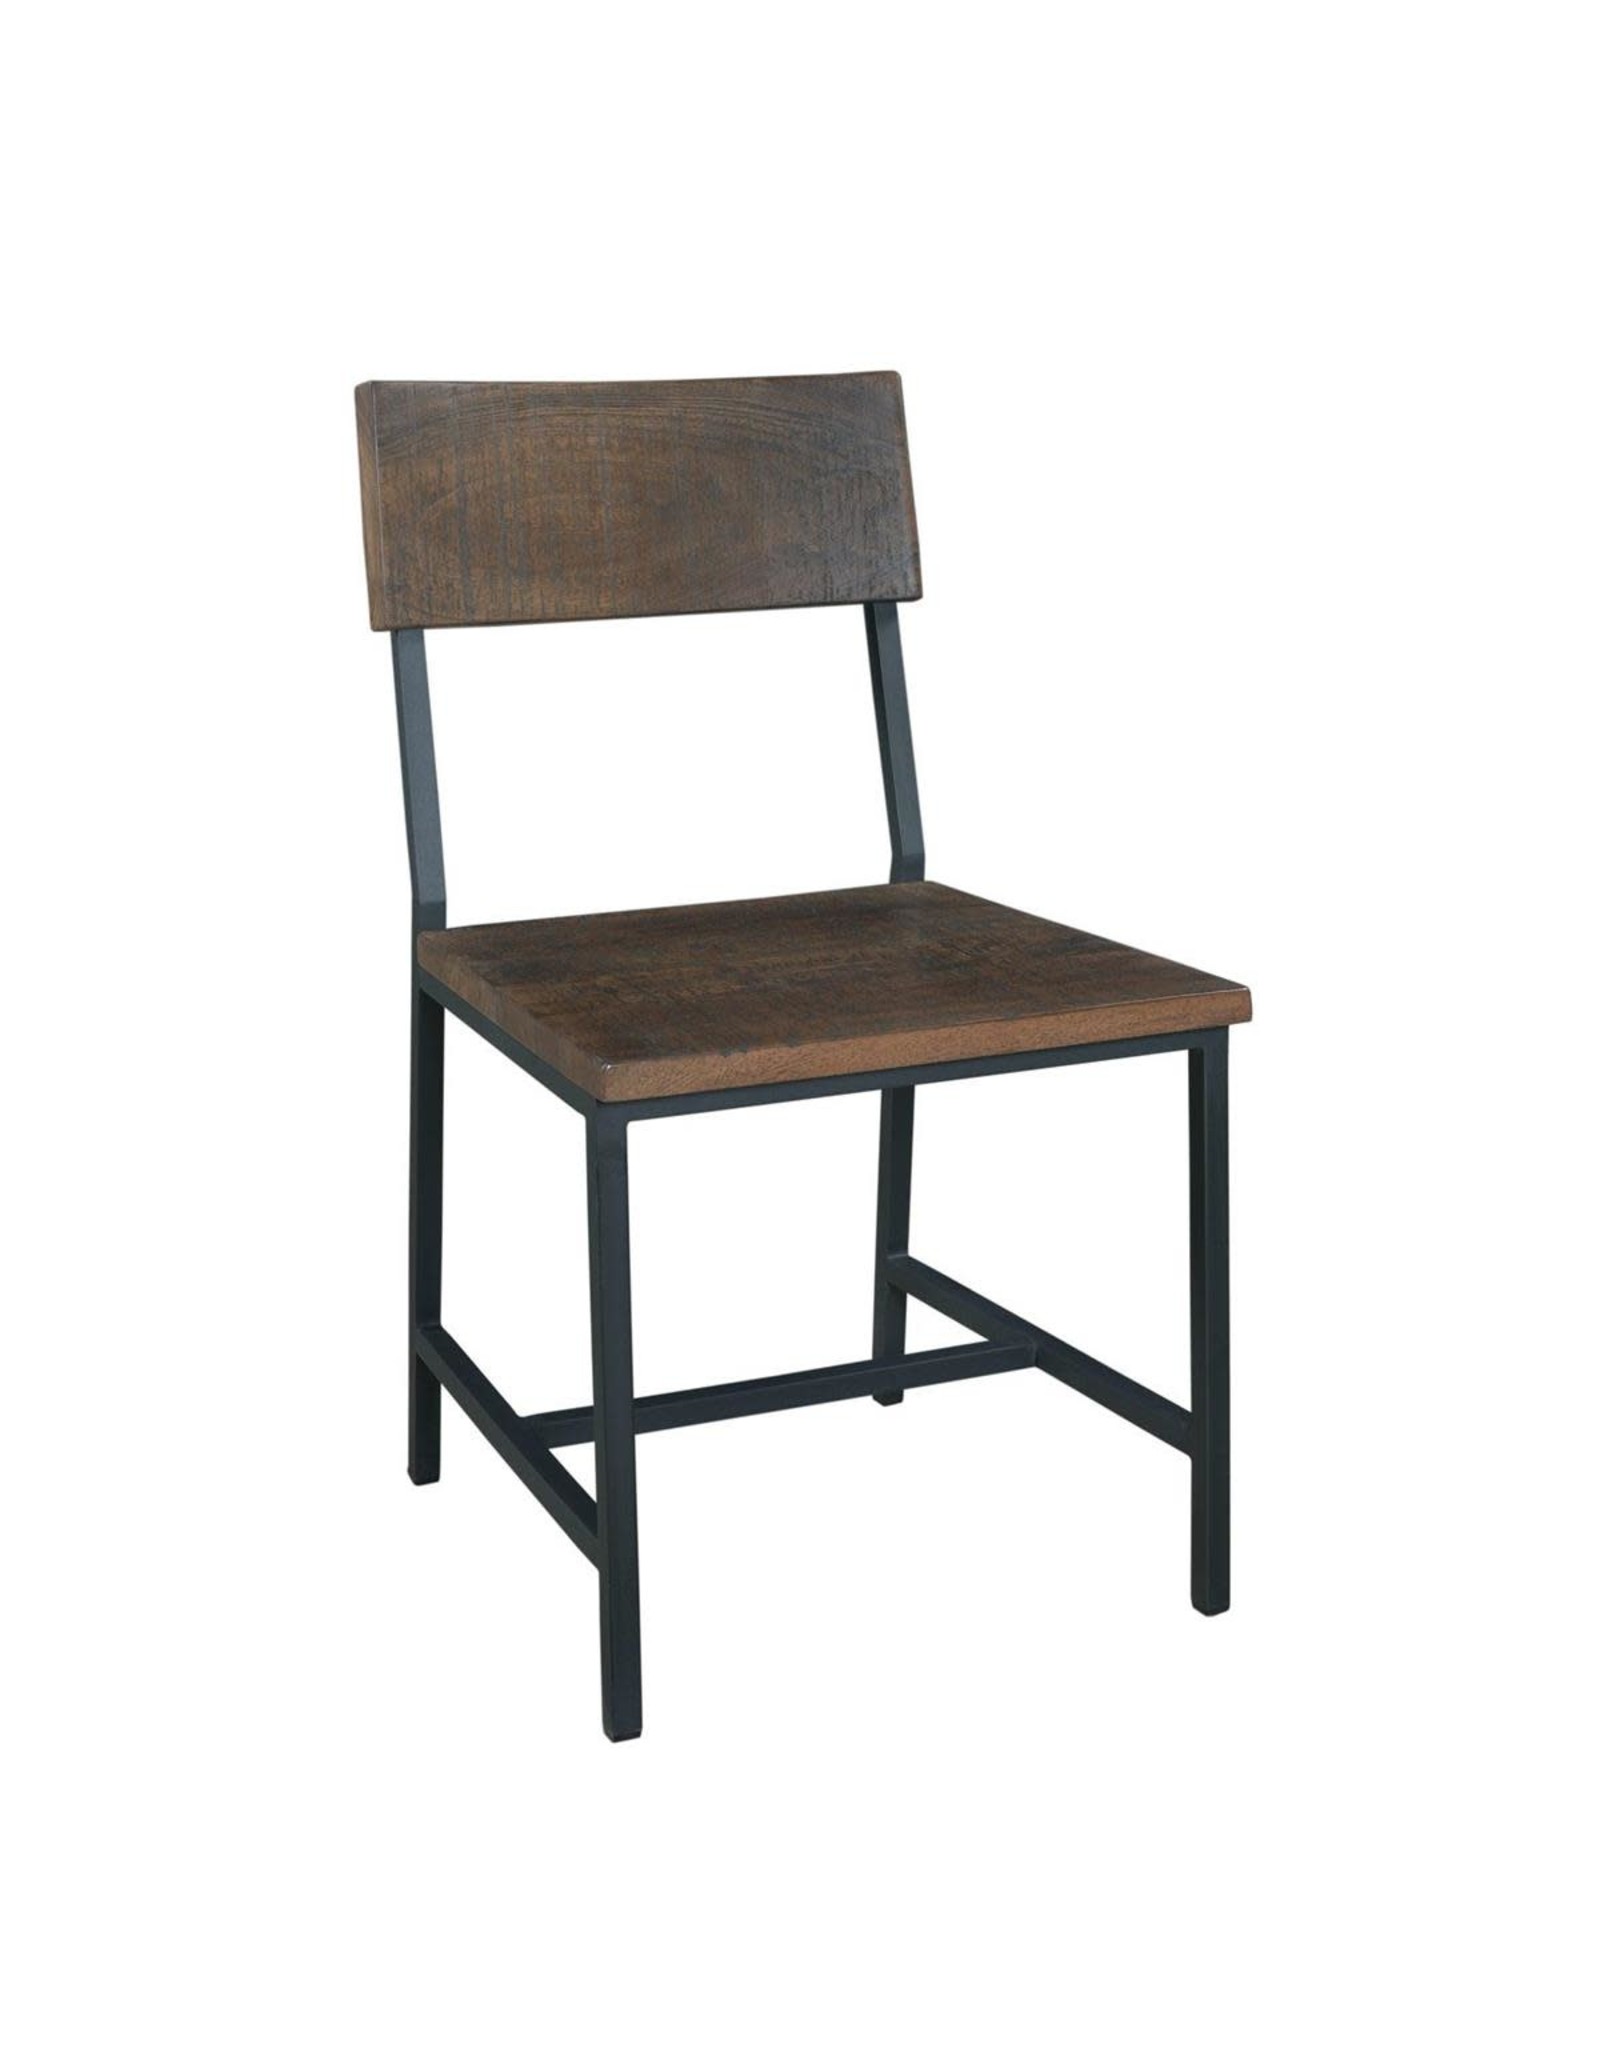 98254 - Dining Chair 18x21x34